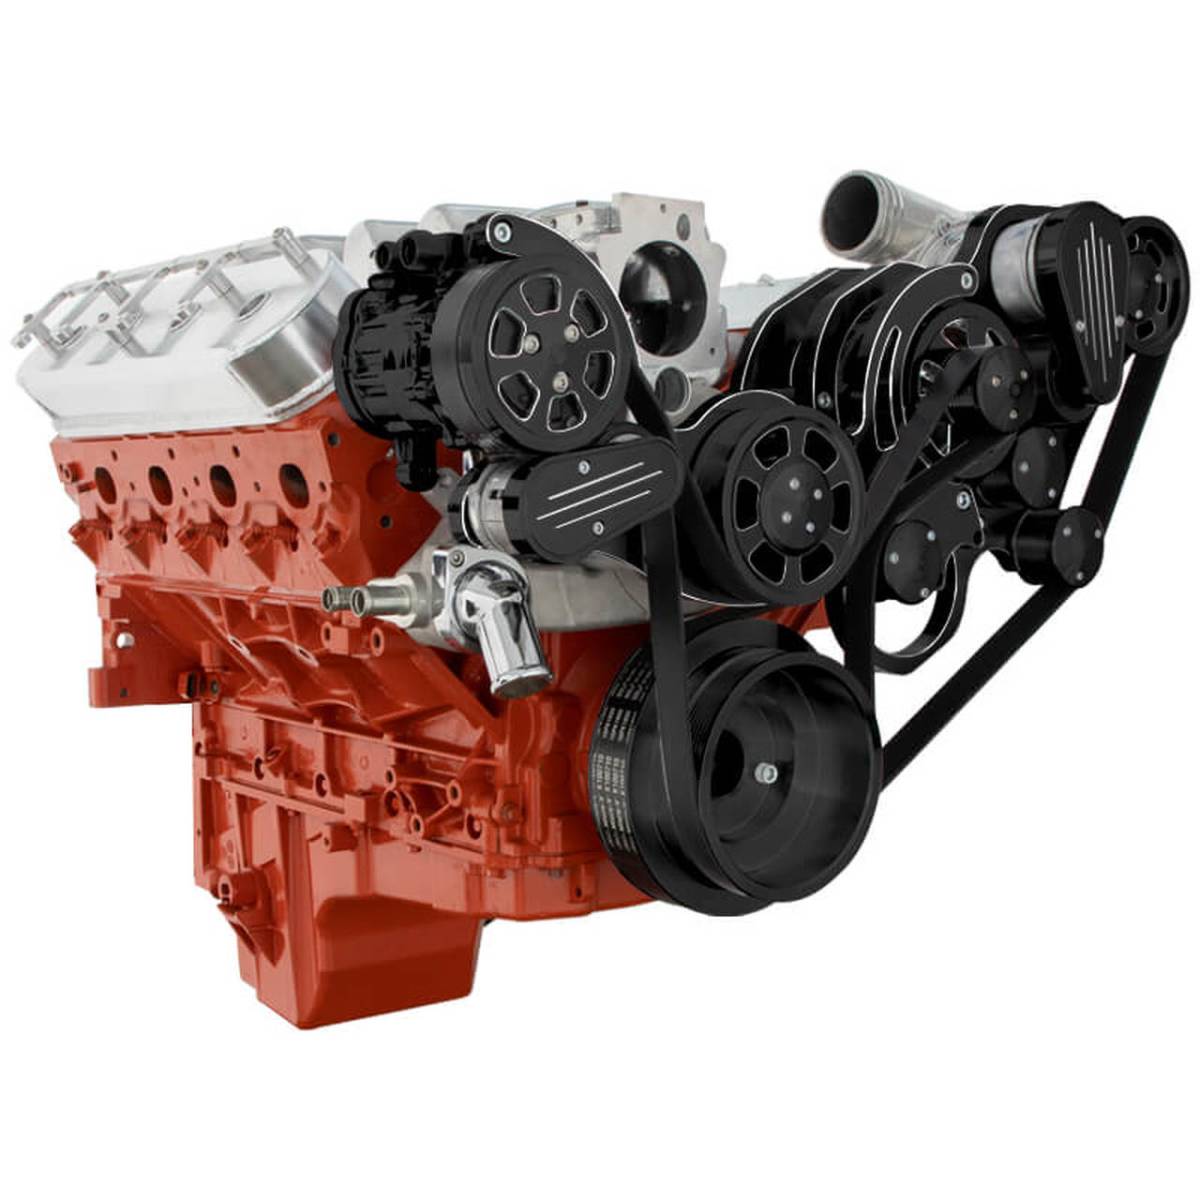 CVF Racing - CVF Wraptor Chevy LS Engine Procharger Serpentine Bracket System with Power Steering & Alternator - Black Diamond Finish - Image 1